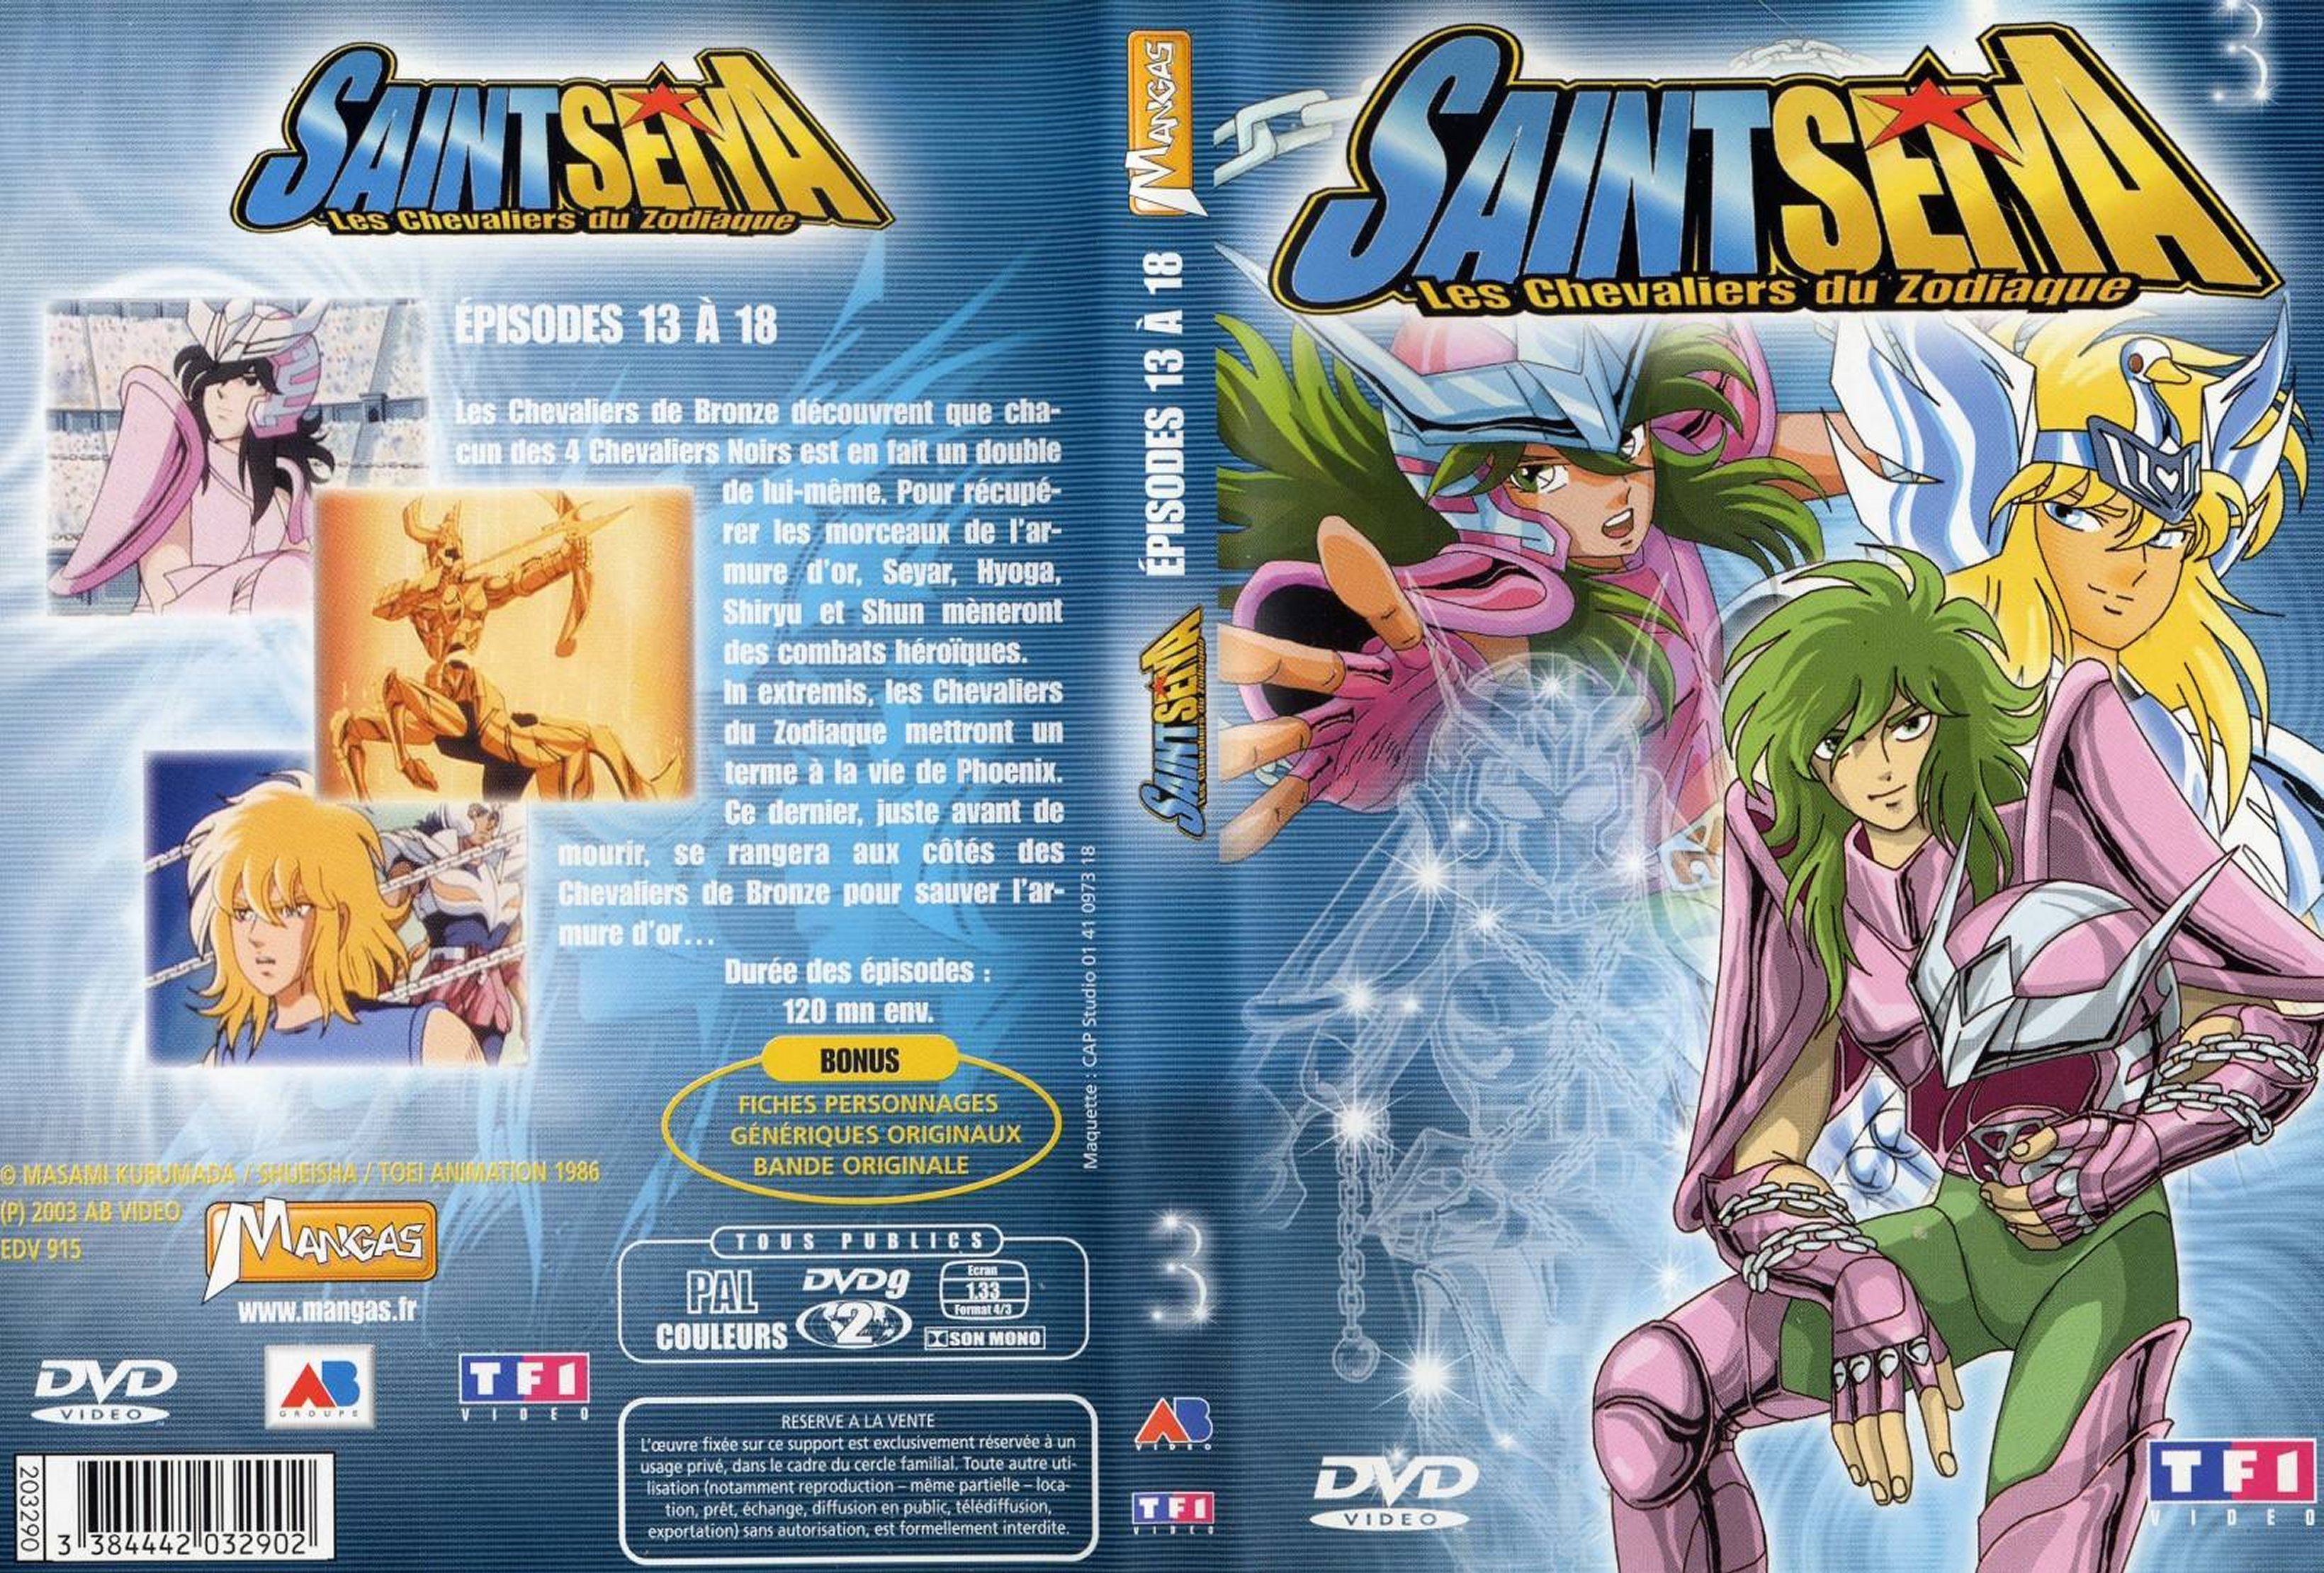 Jaquette DVD Saint Seiya vol 03